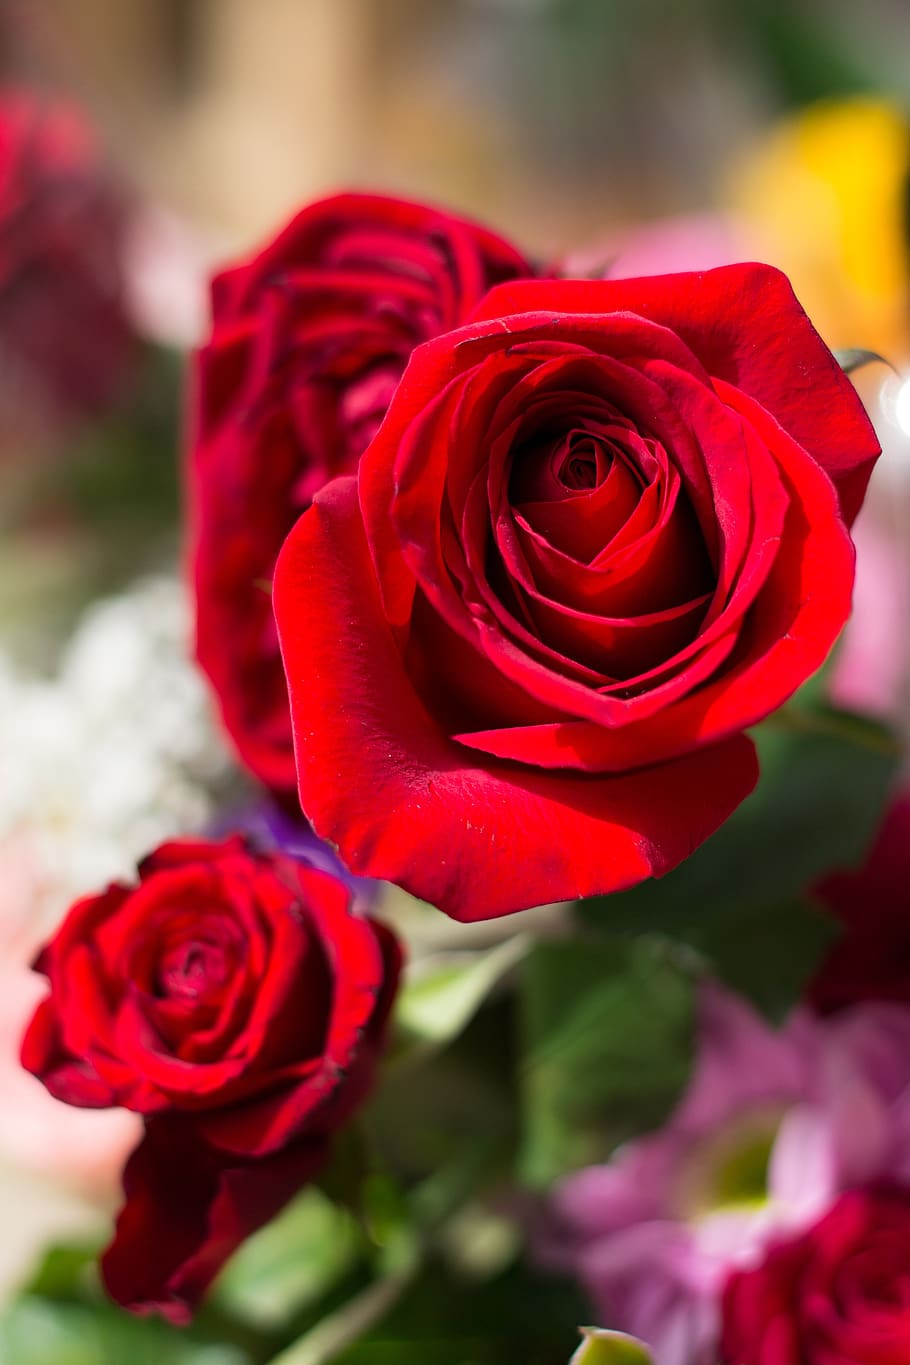 rosa roja, ro, flor, naturaleza, planta floreciendo, rosa, rosa - flor, belleza en la naturaleza, rojo, vulnerabilidad